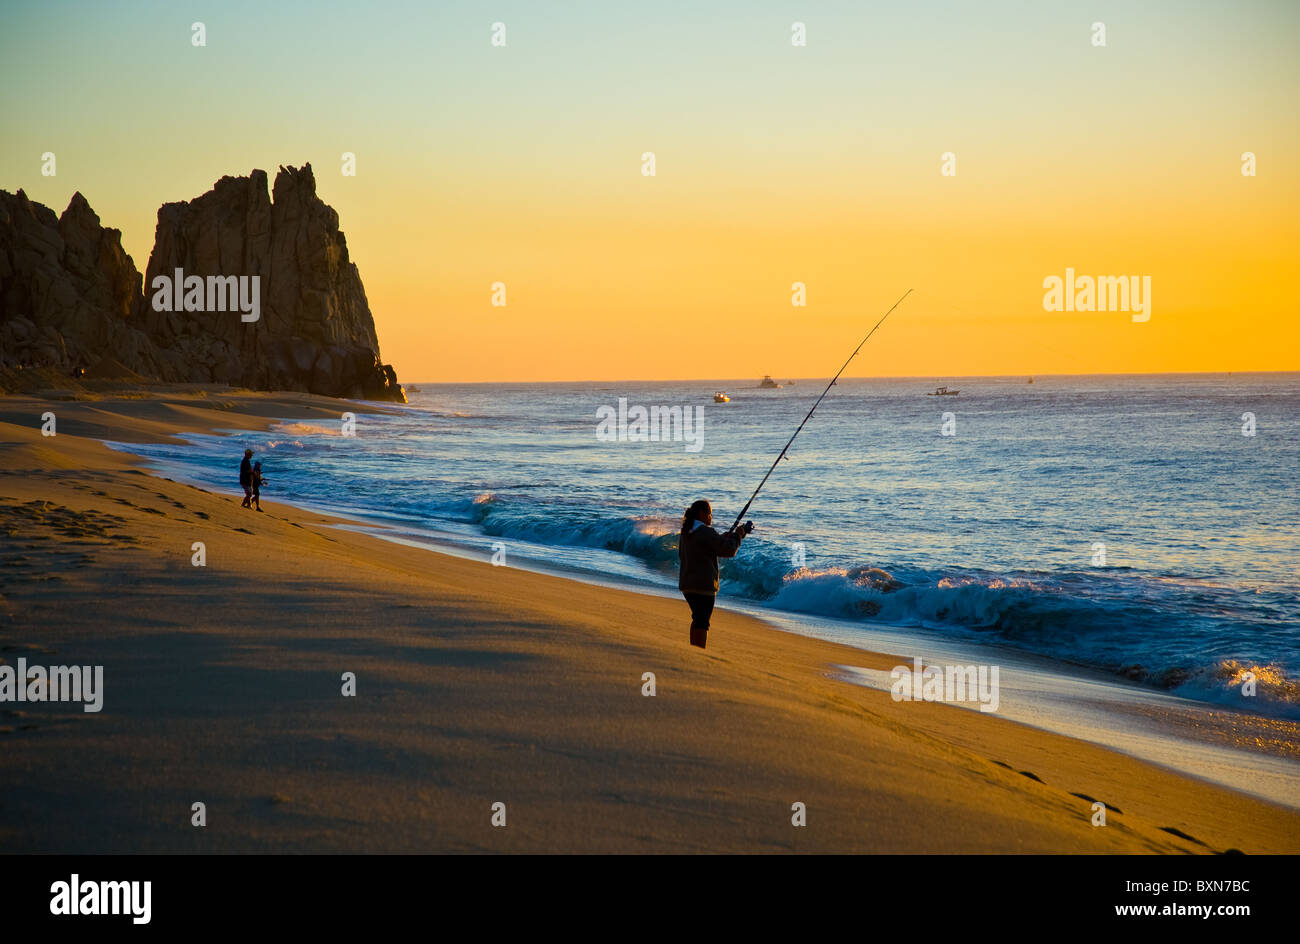 https://c8.alamy.com/comp/BXN7BC/fishing-from-sandy-beach-shore-pacific-ocean-sunrise-local-lady-woman-BXN7BC.jpg